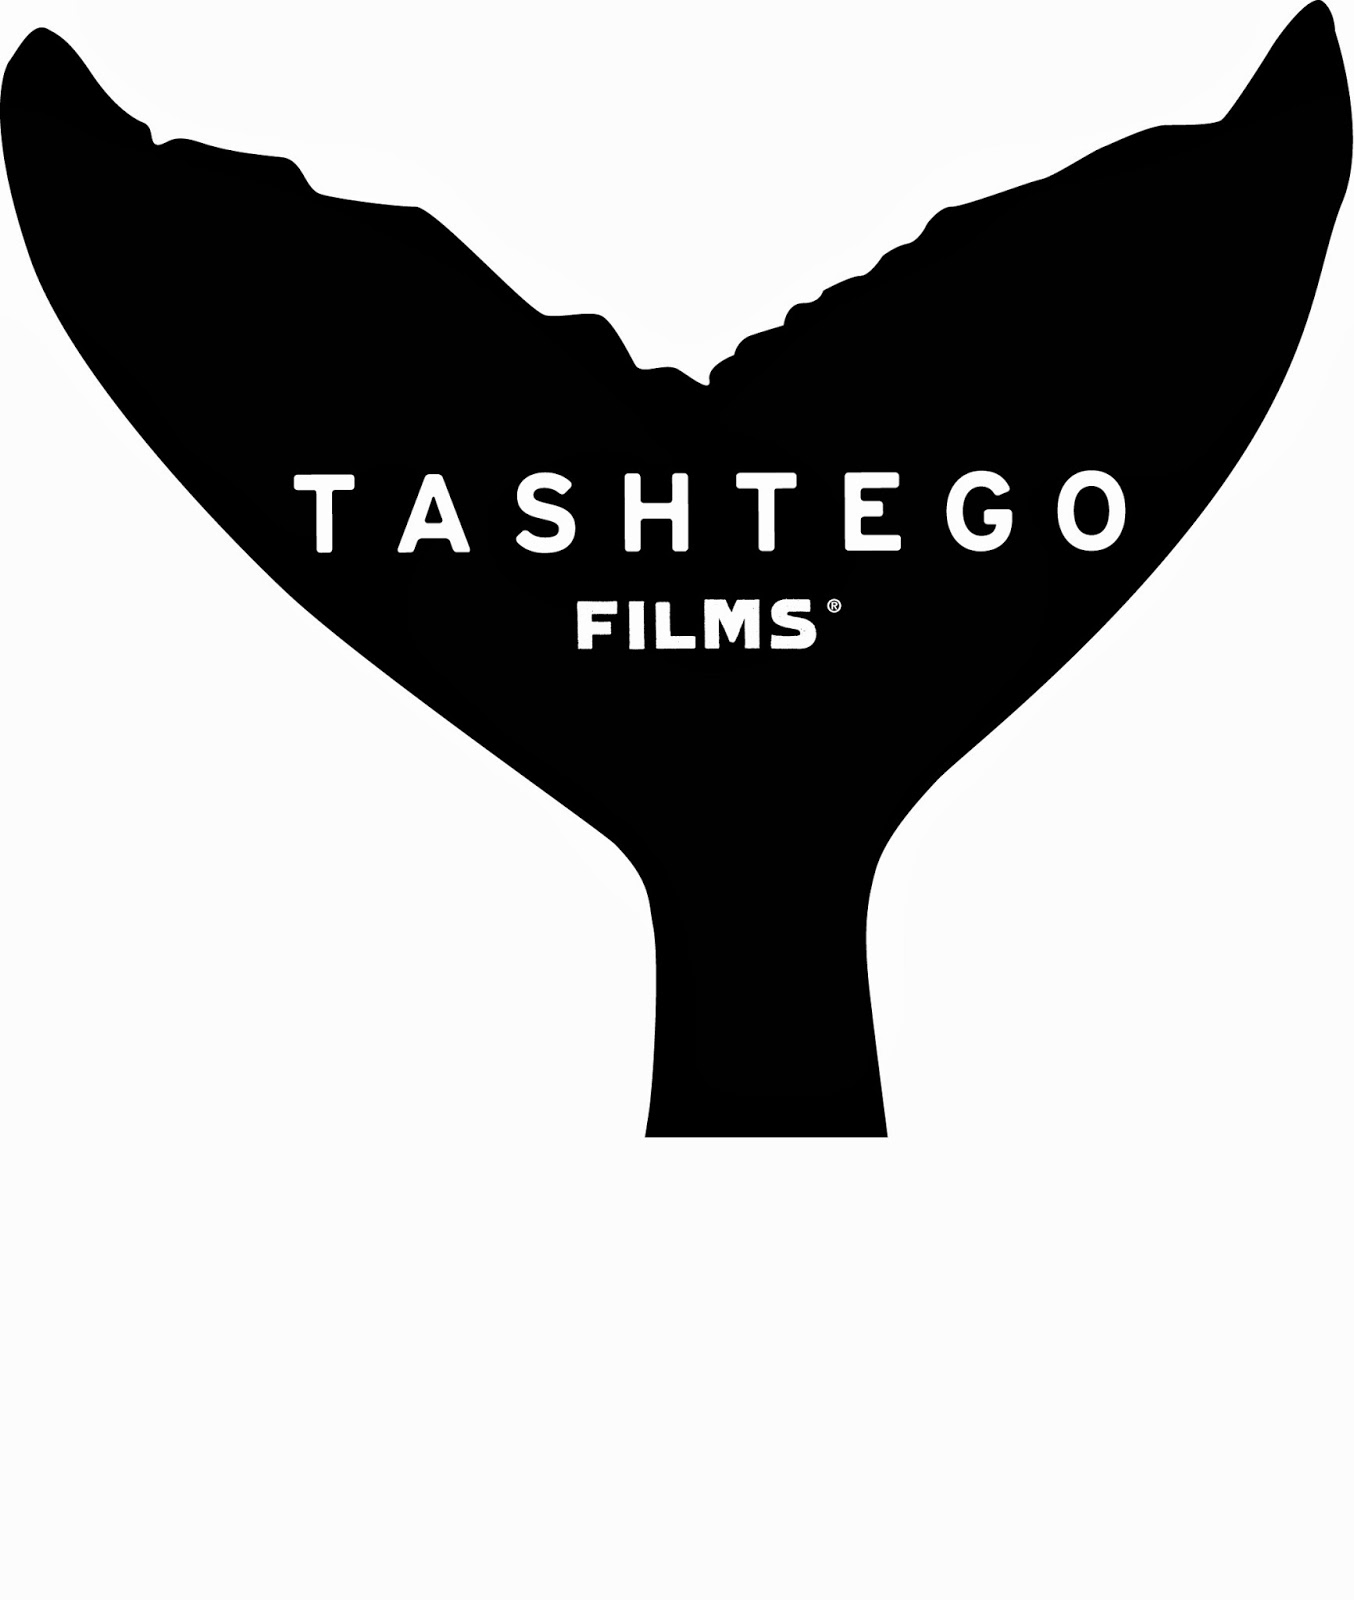 Photo of Tashtego Films in New York City, New York, United States - 1 Picture of Point of interest, Establishment